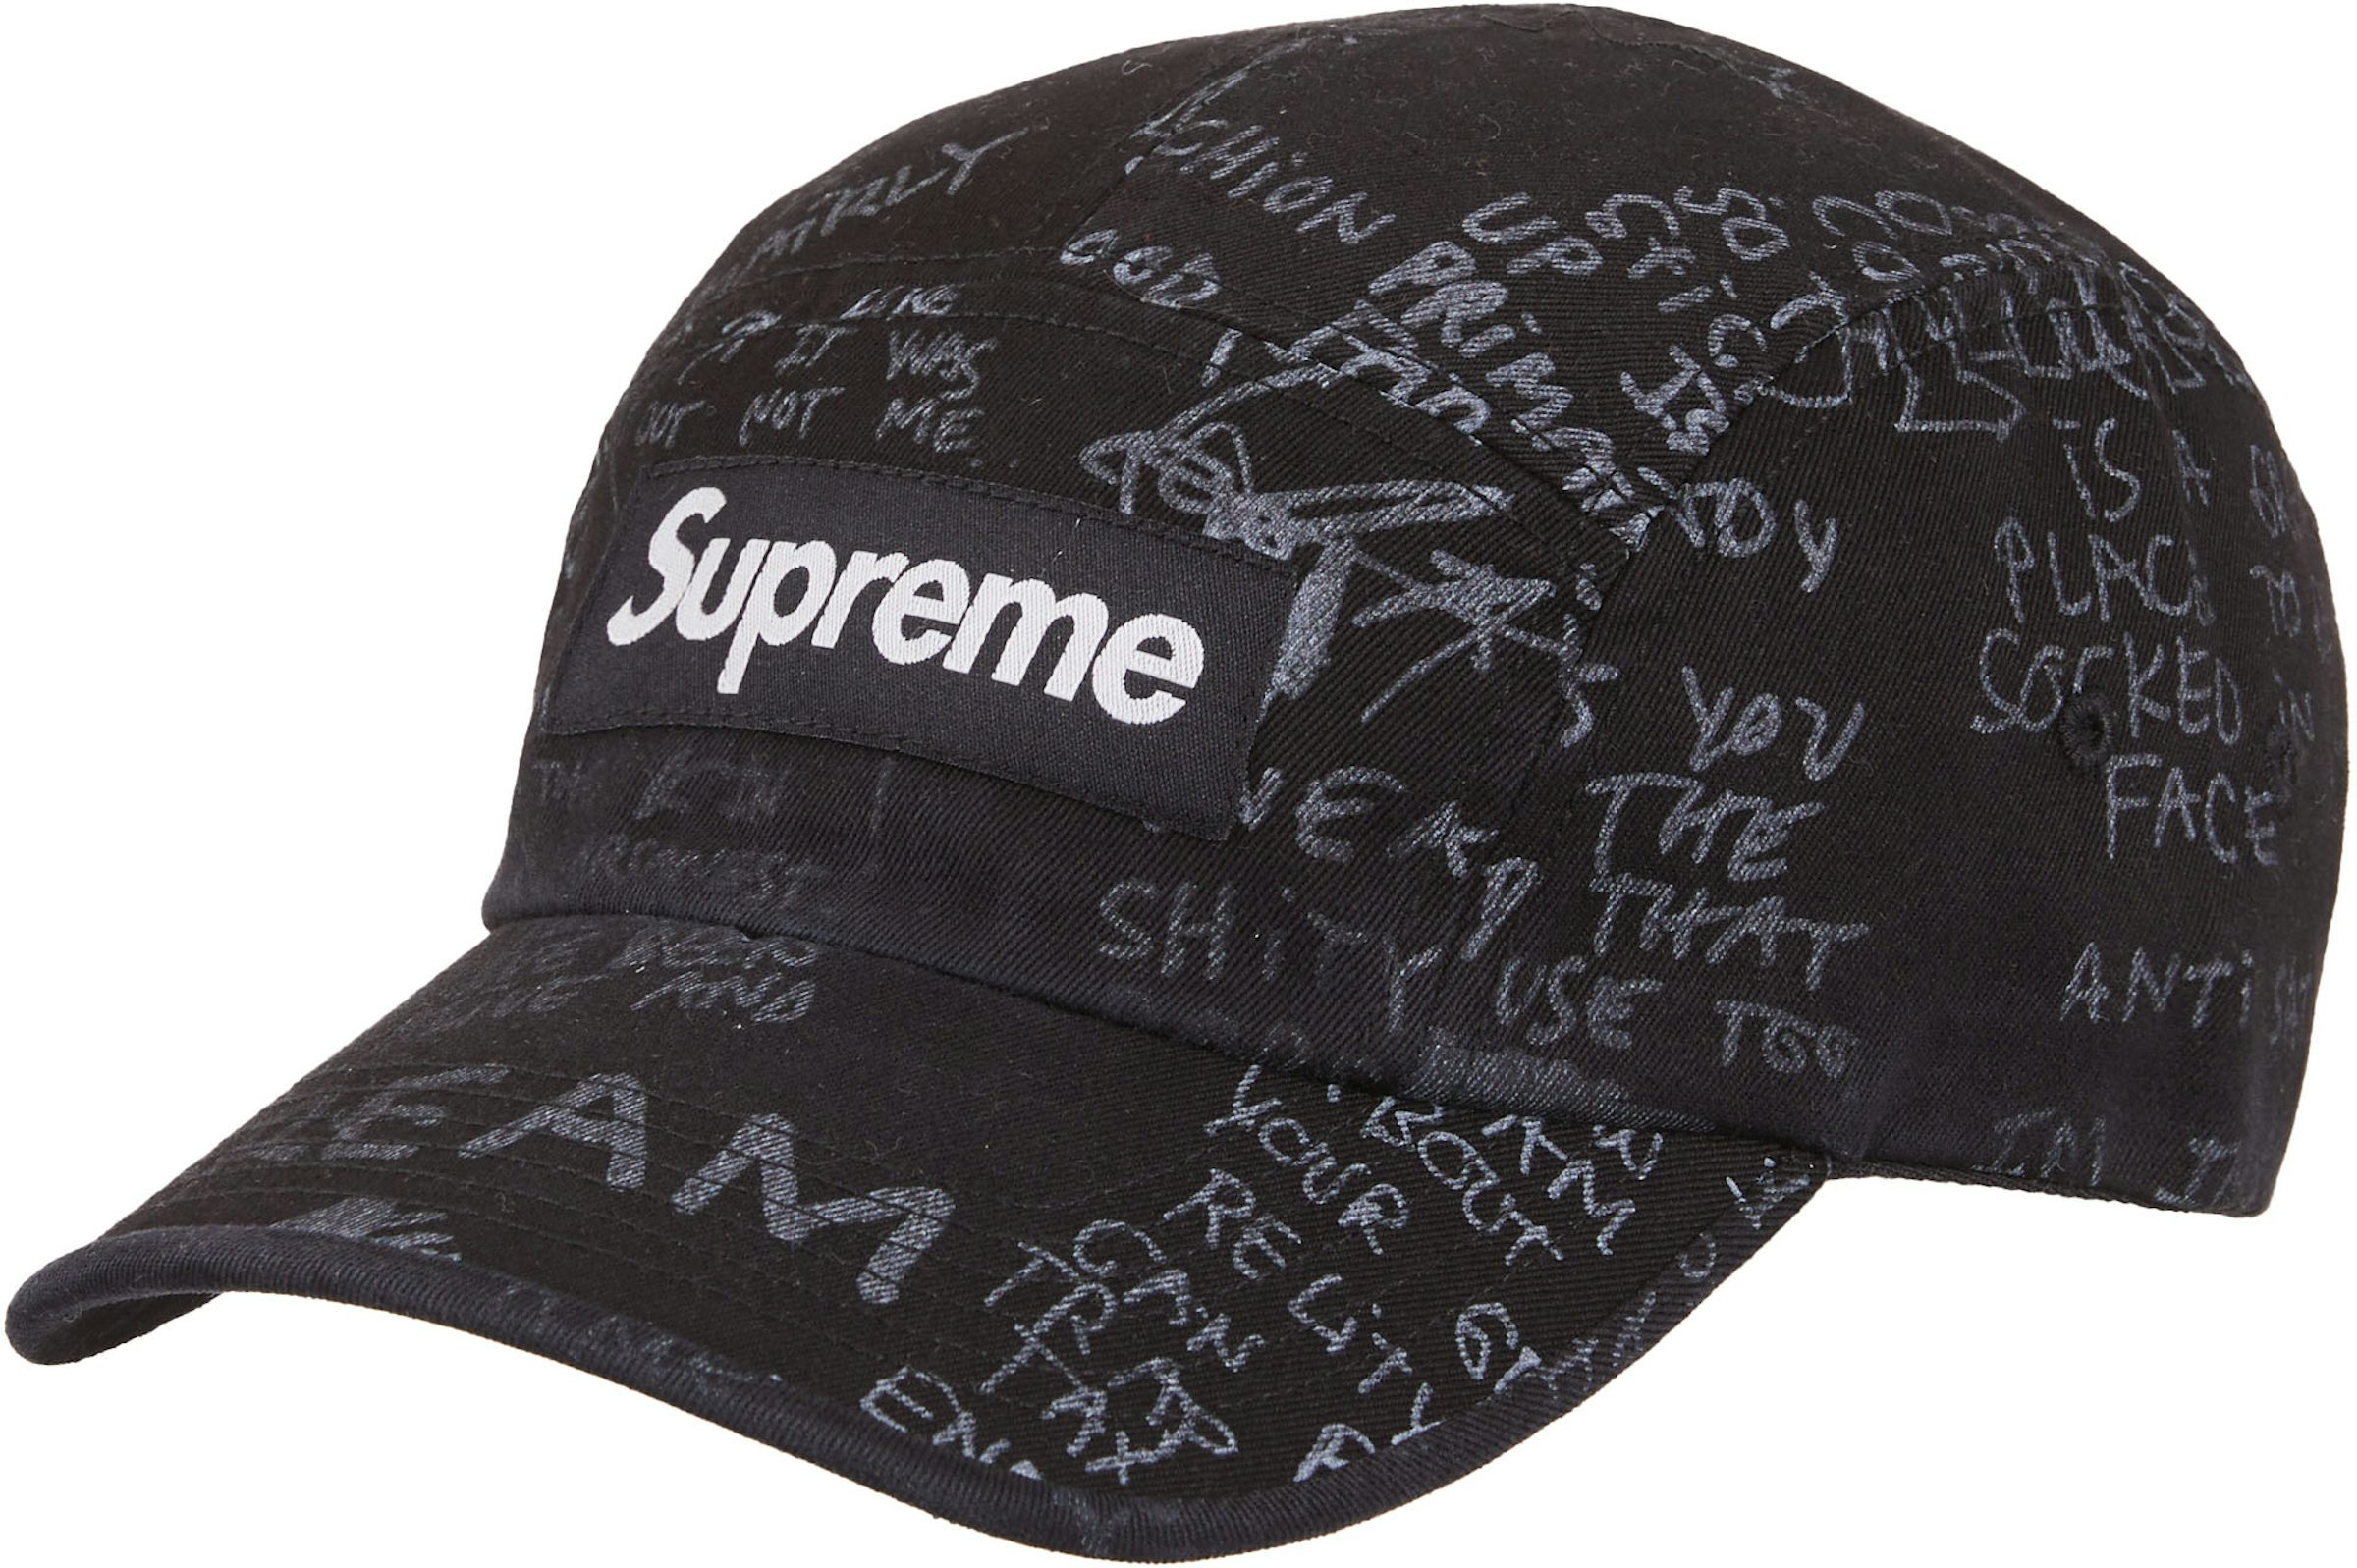 Supreme Supreme Gonz Head Camp Hat